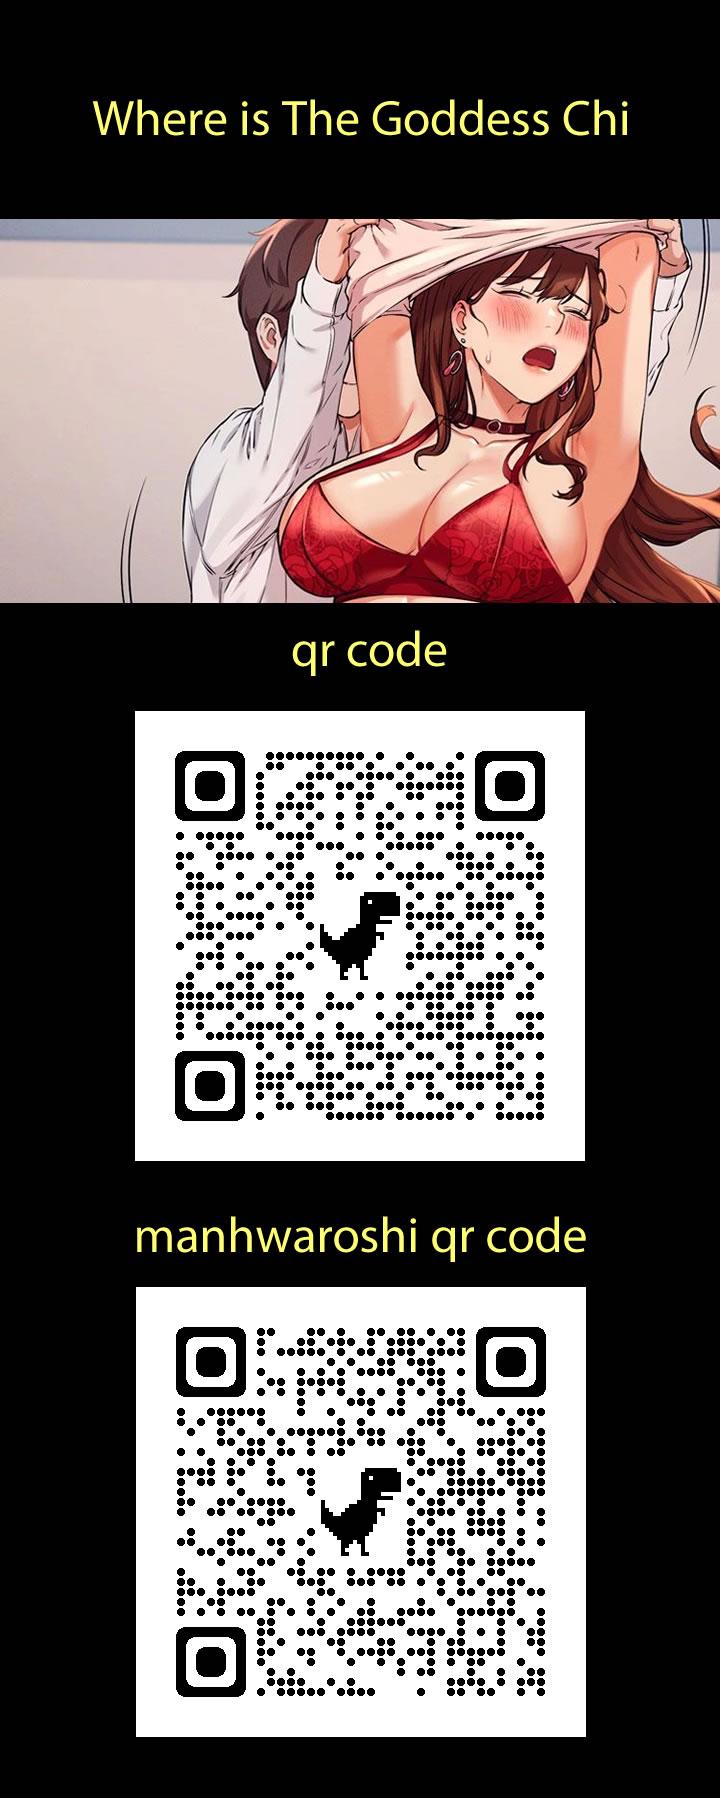 Where is the goddess chi 01-30 manhwaroshi 0